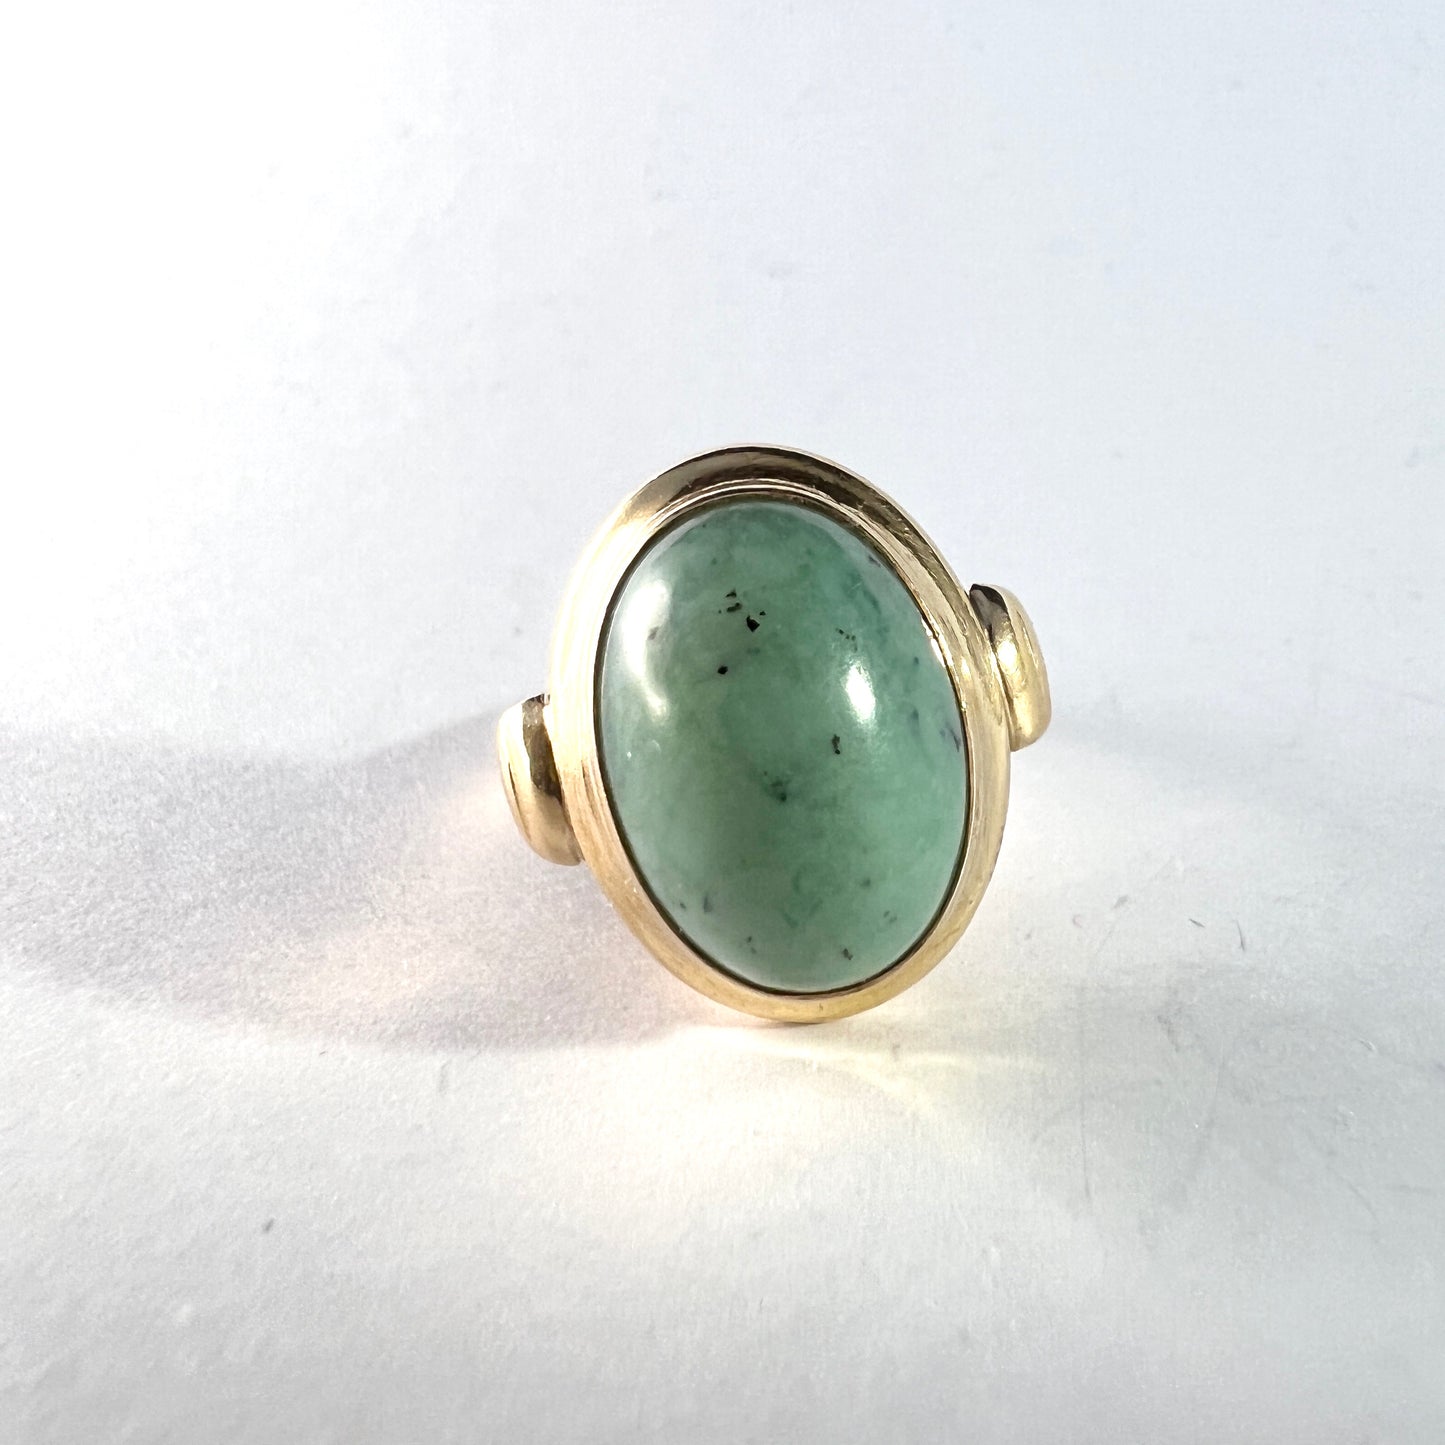 Eastern Mediterranean 1950-60s, 18k Gold Jade Ring.